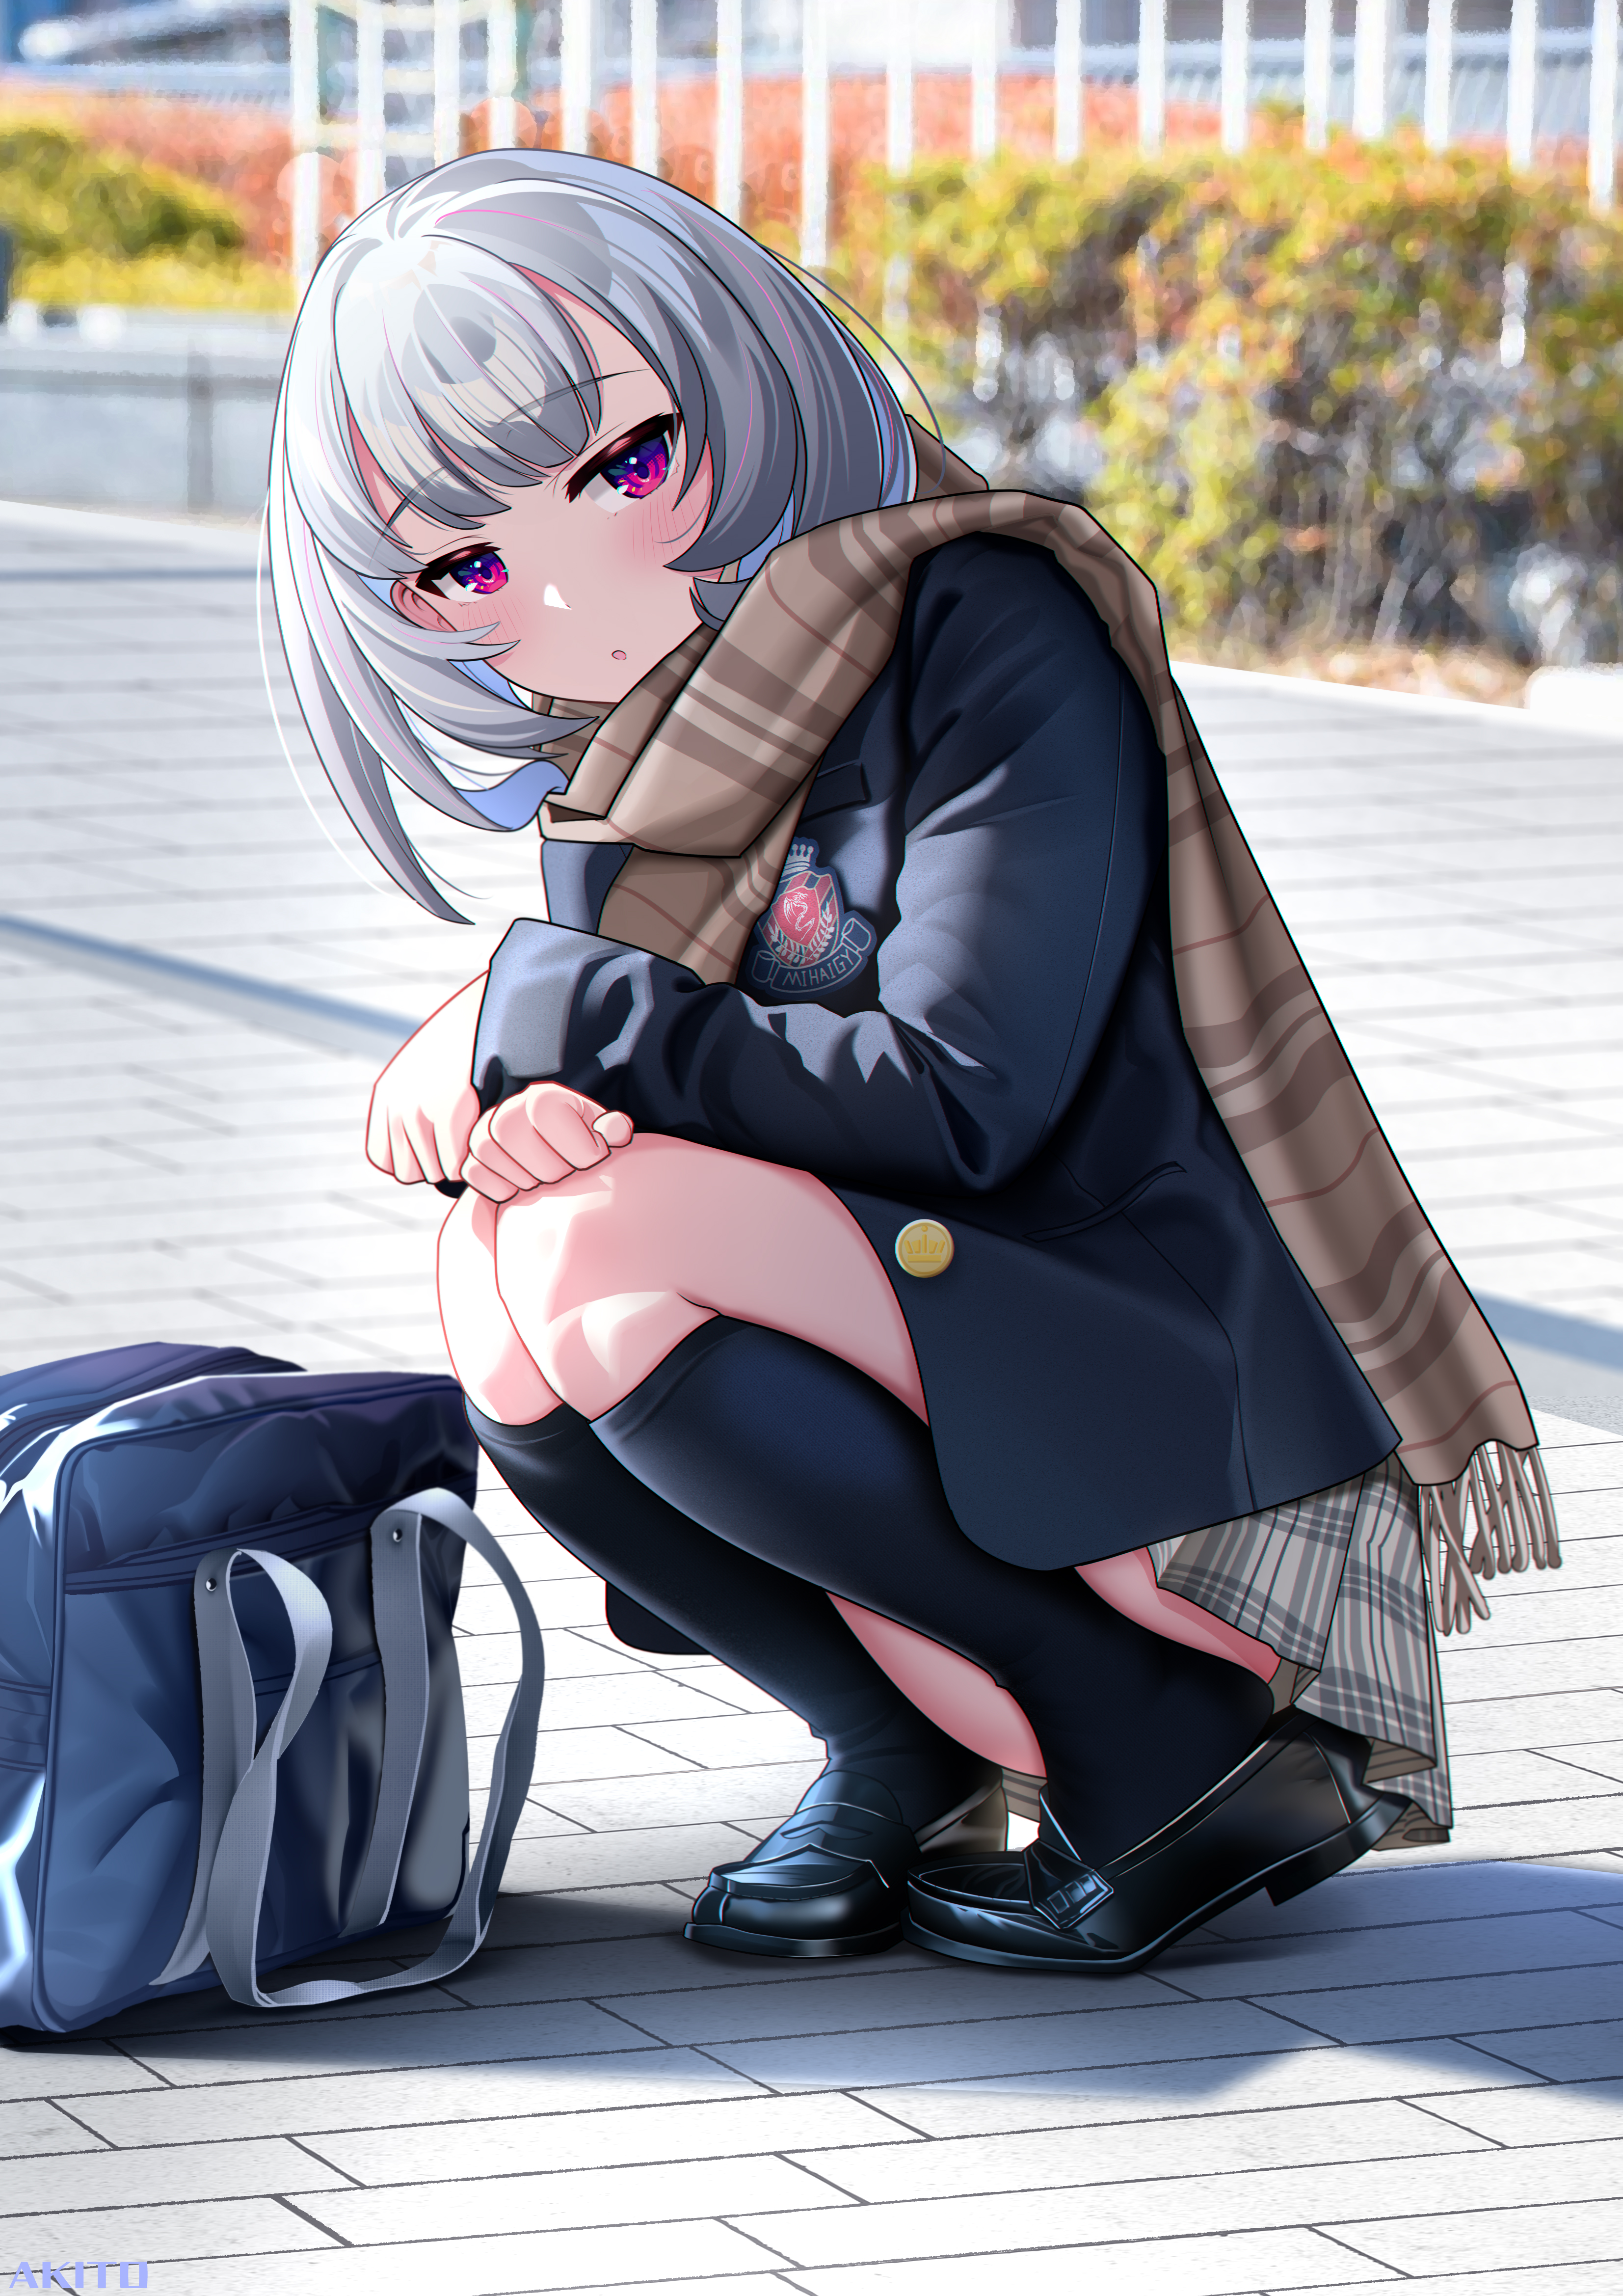 Anime 3307x4677 anime girls white hair portrait display squatting scarf looking at viewer schoolgirl school uniform blushing thigh high socks skirt